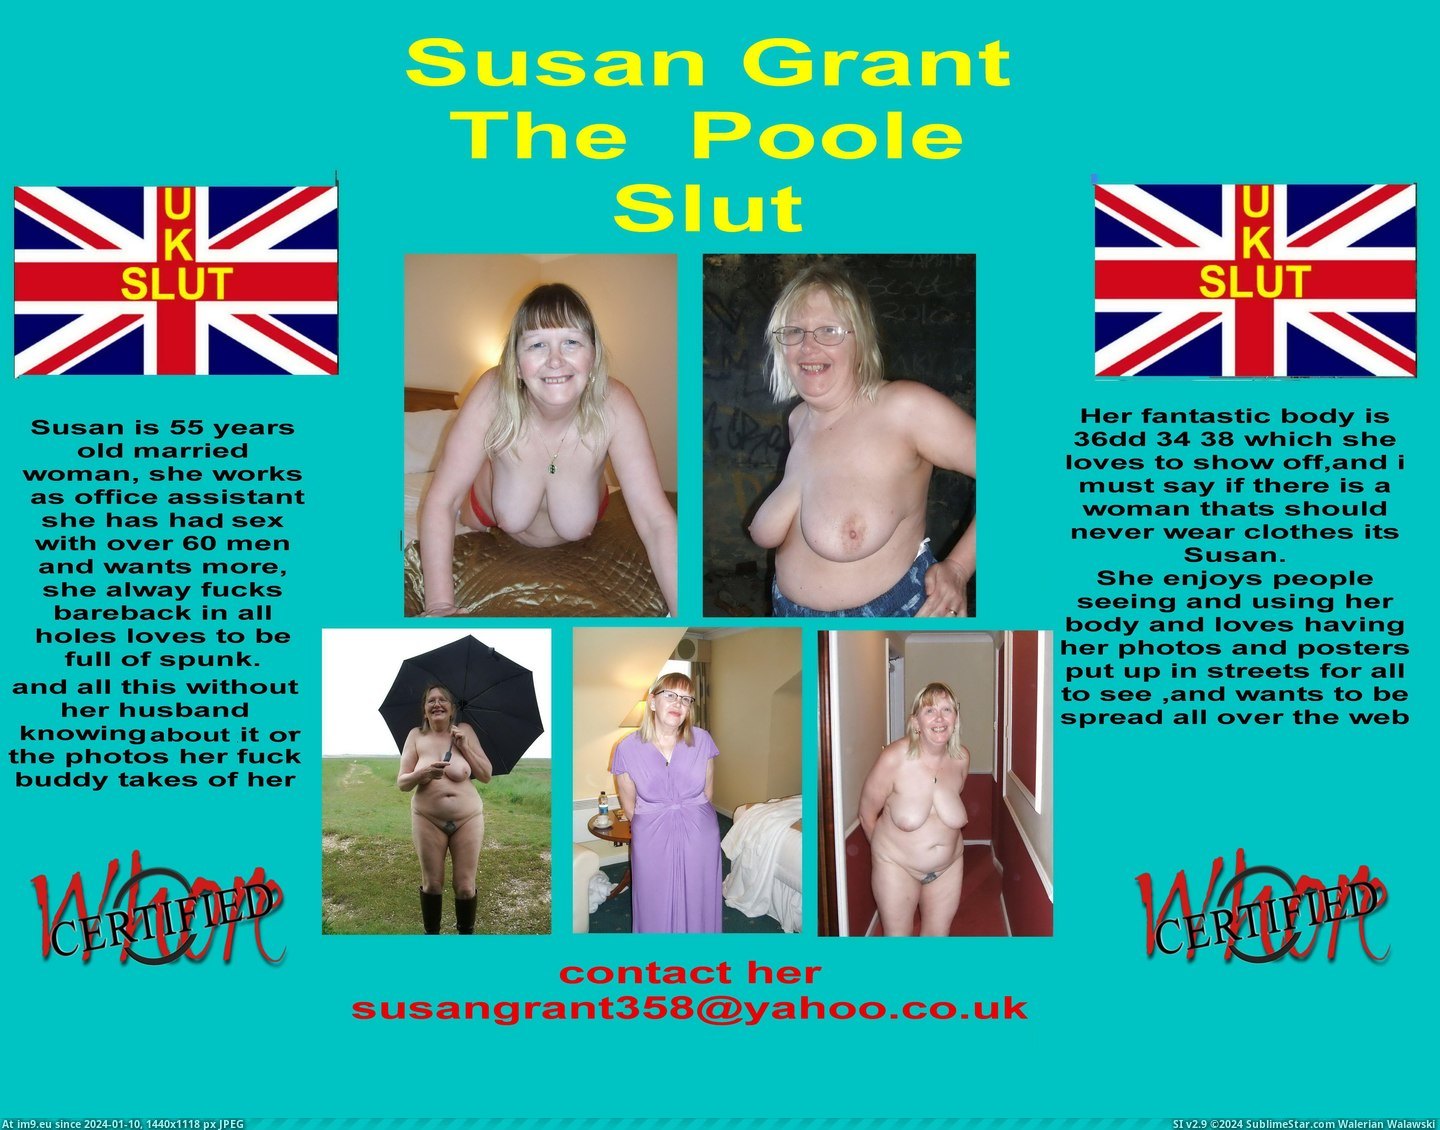  #Poster  suesan poster 2 Pic. (Image of album Susan Grant of Poole Dorset))